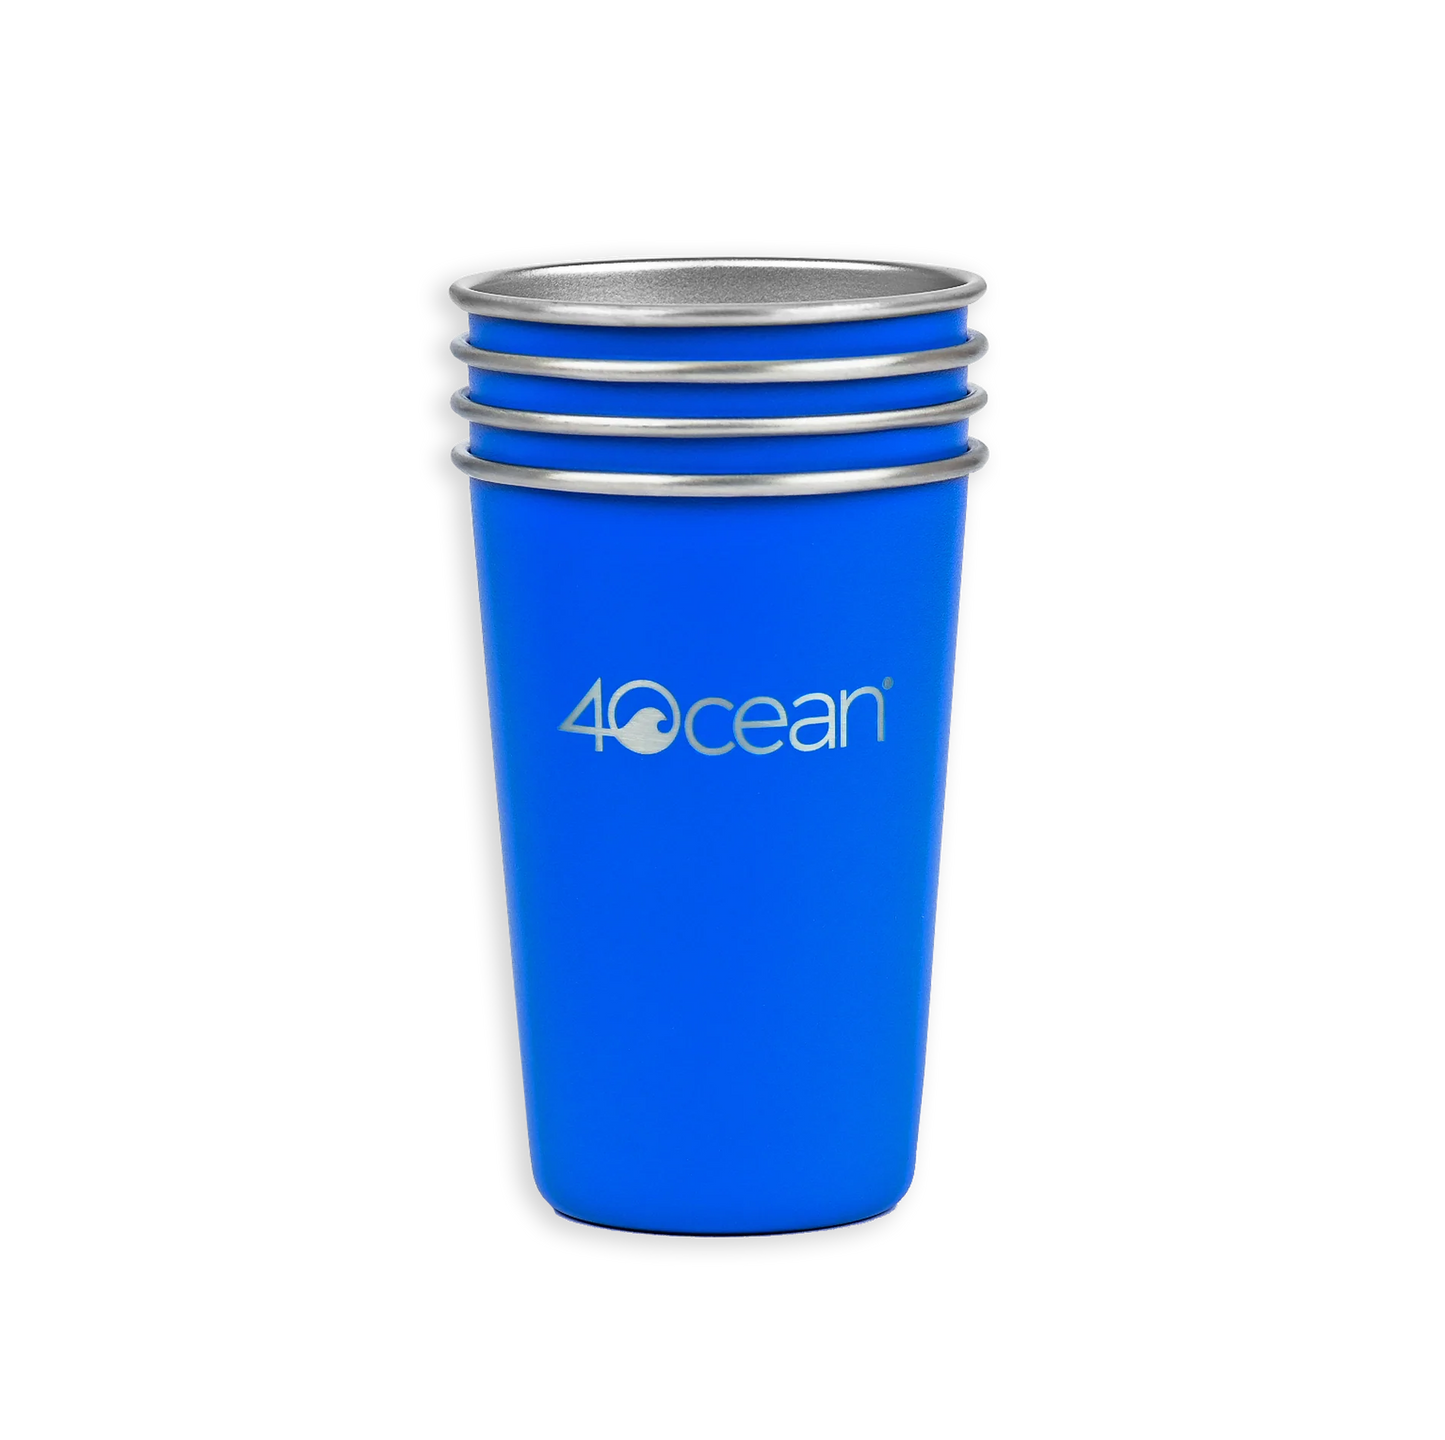 4Ocean Reusable Stainless Steel Cups 4-Pack.